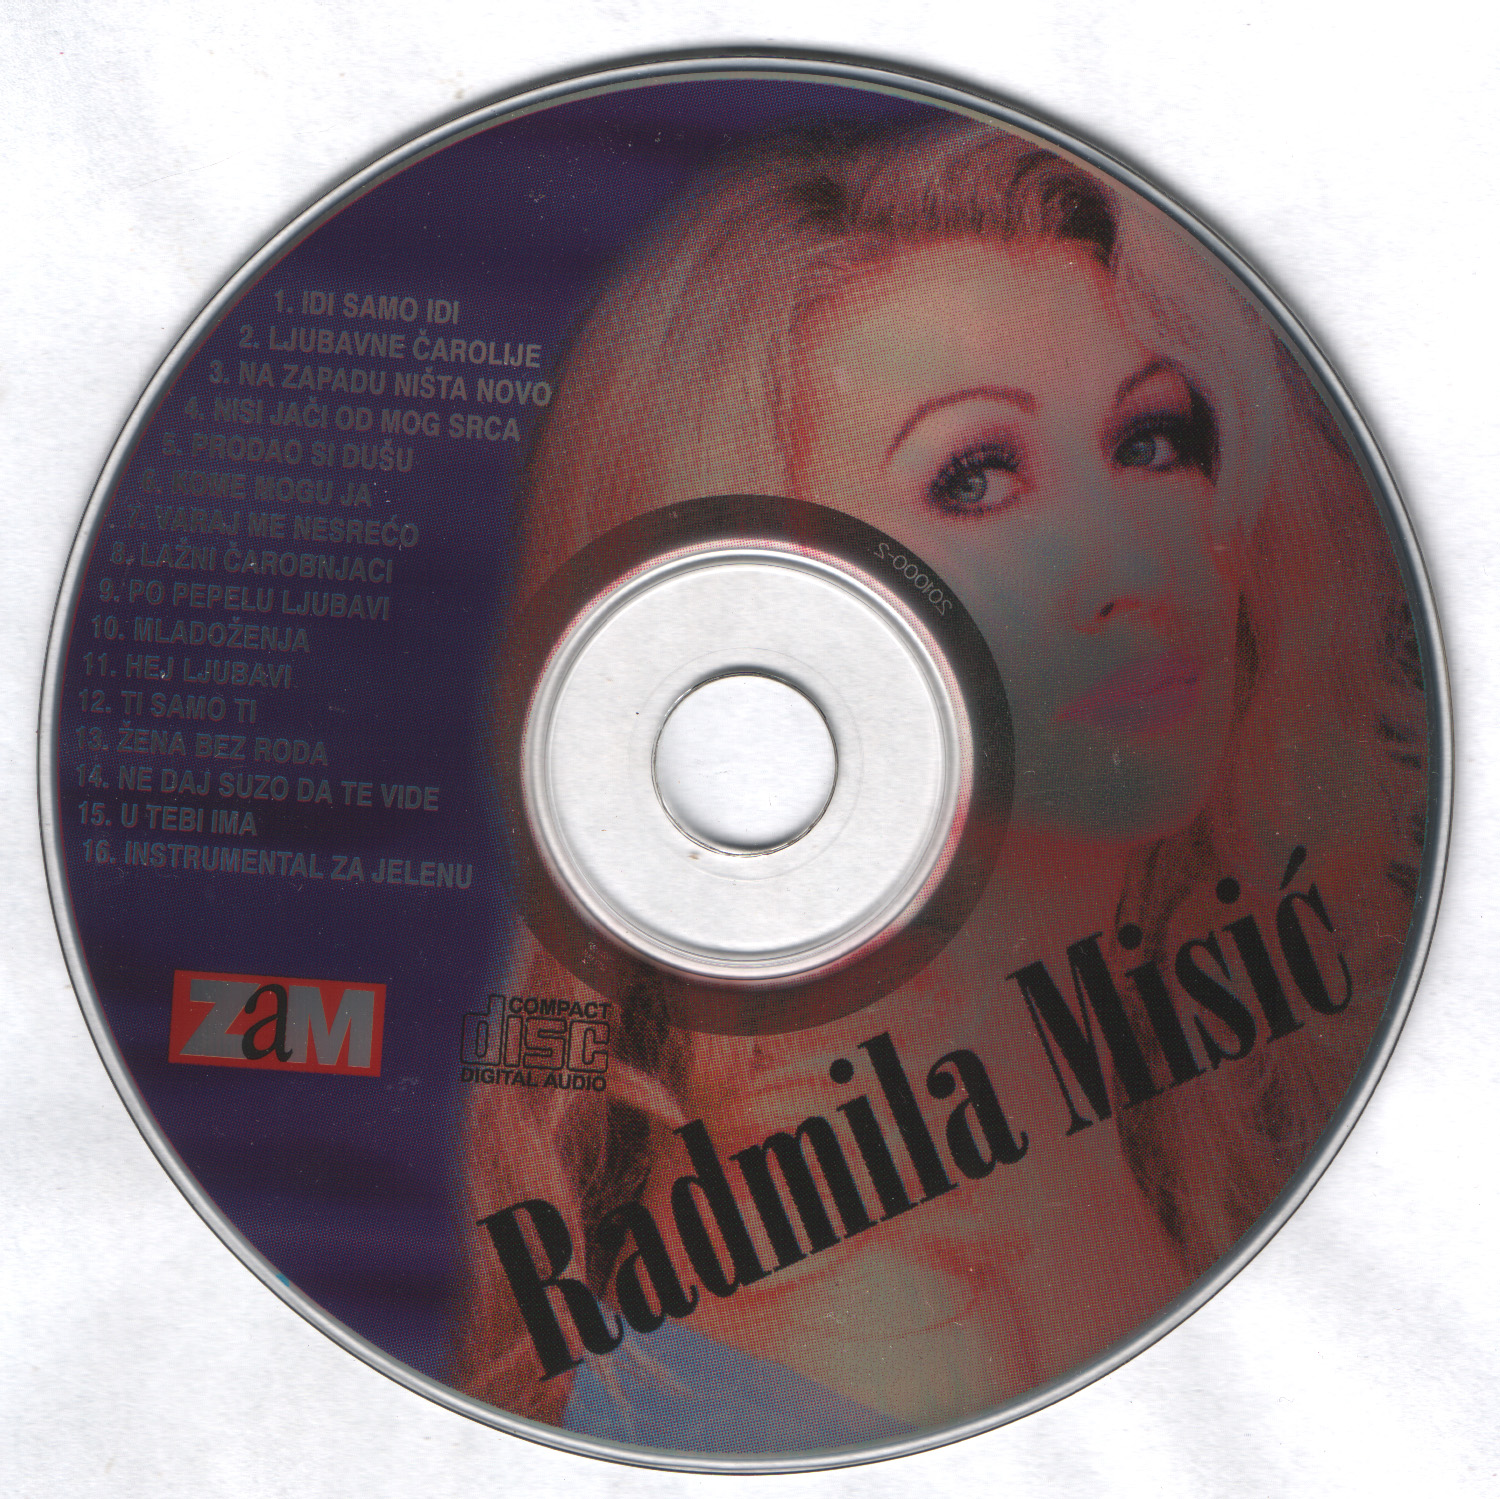 Radmila Misic 2000 Cd